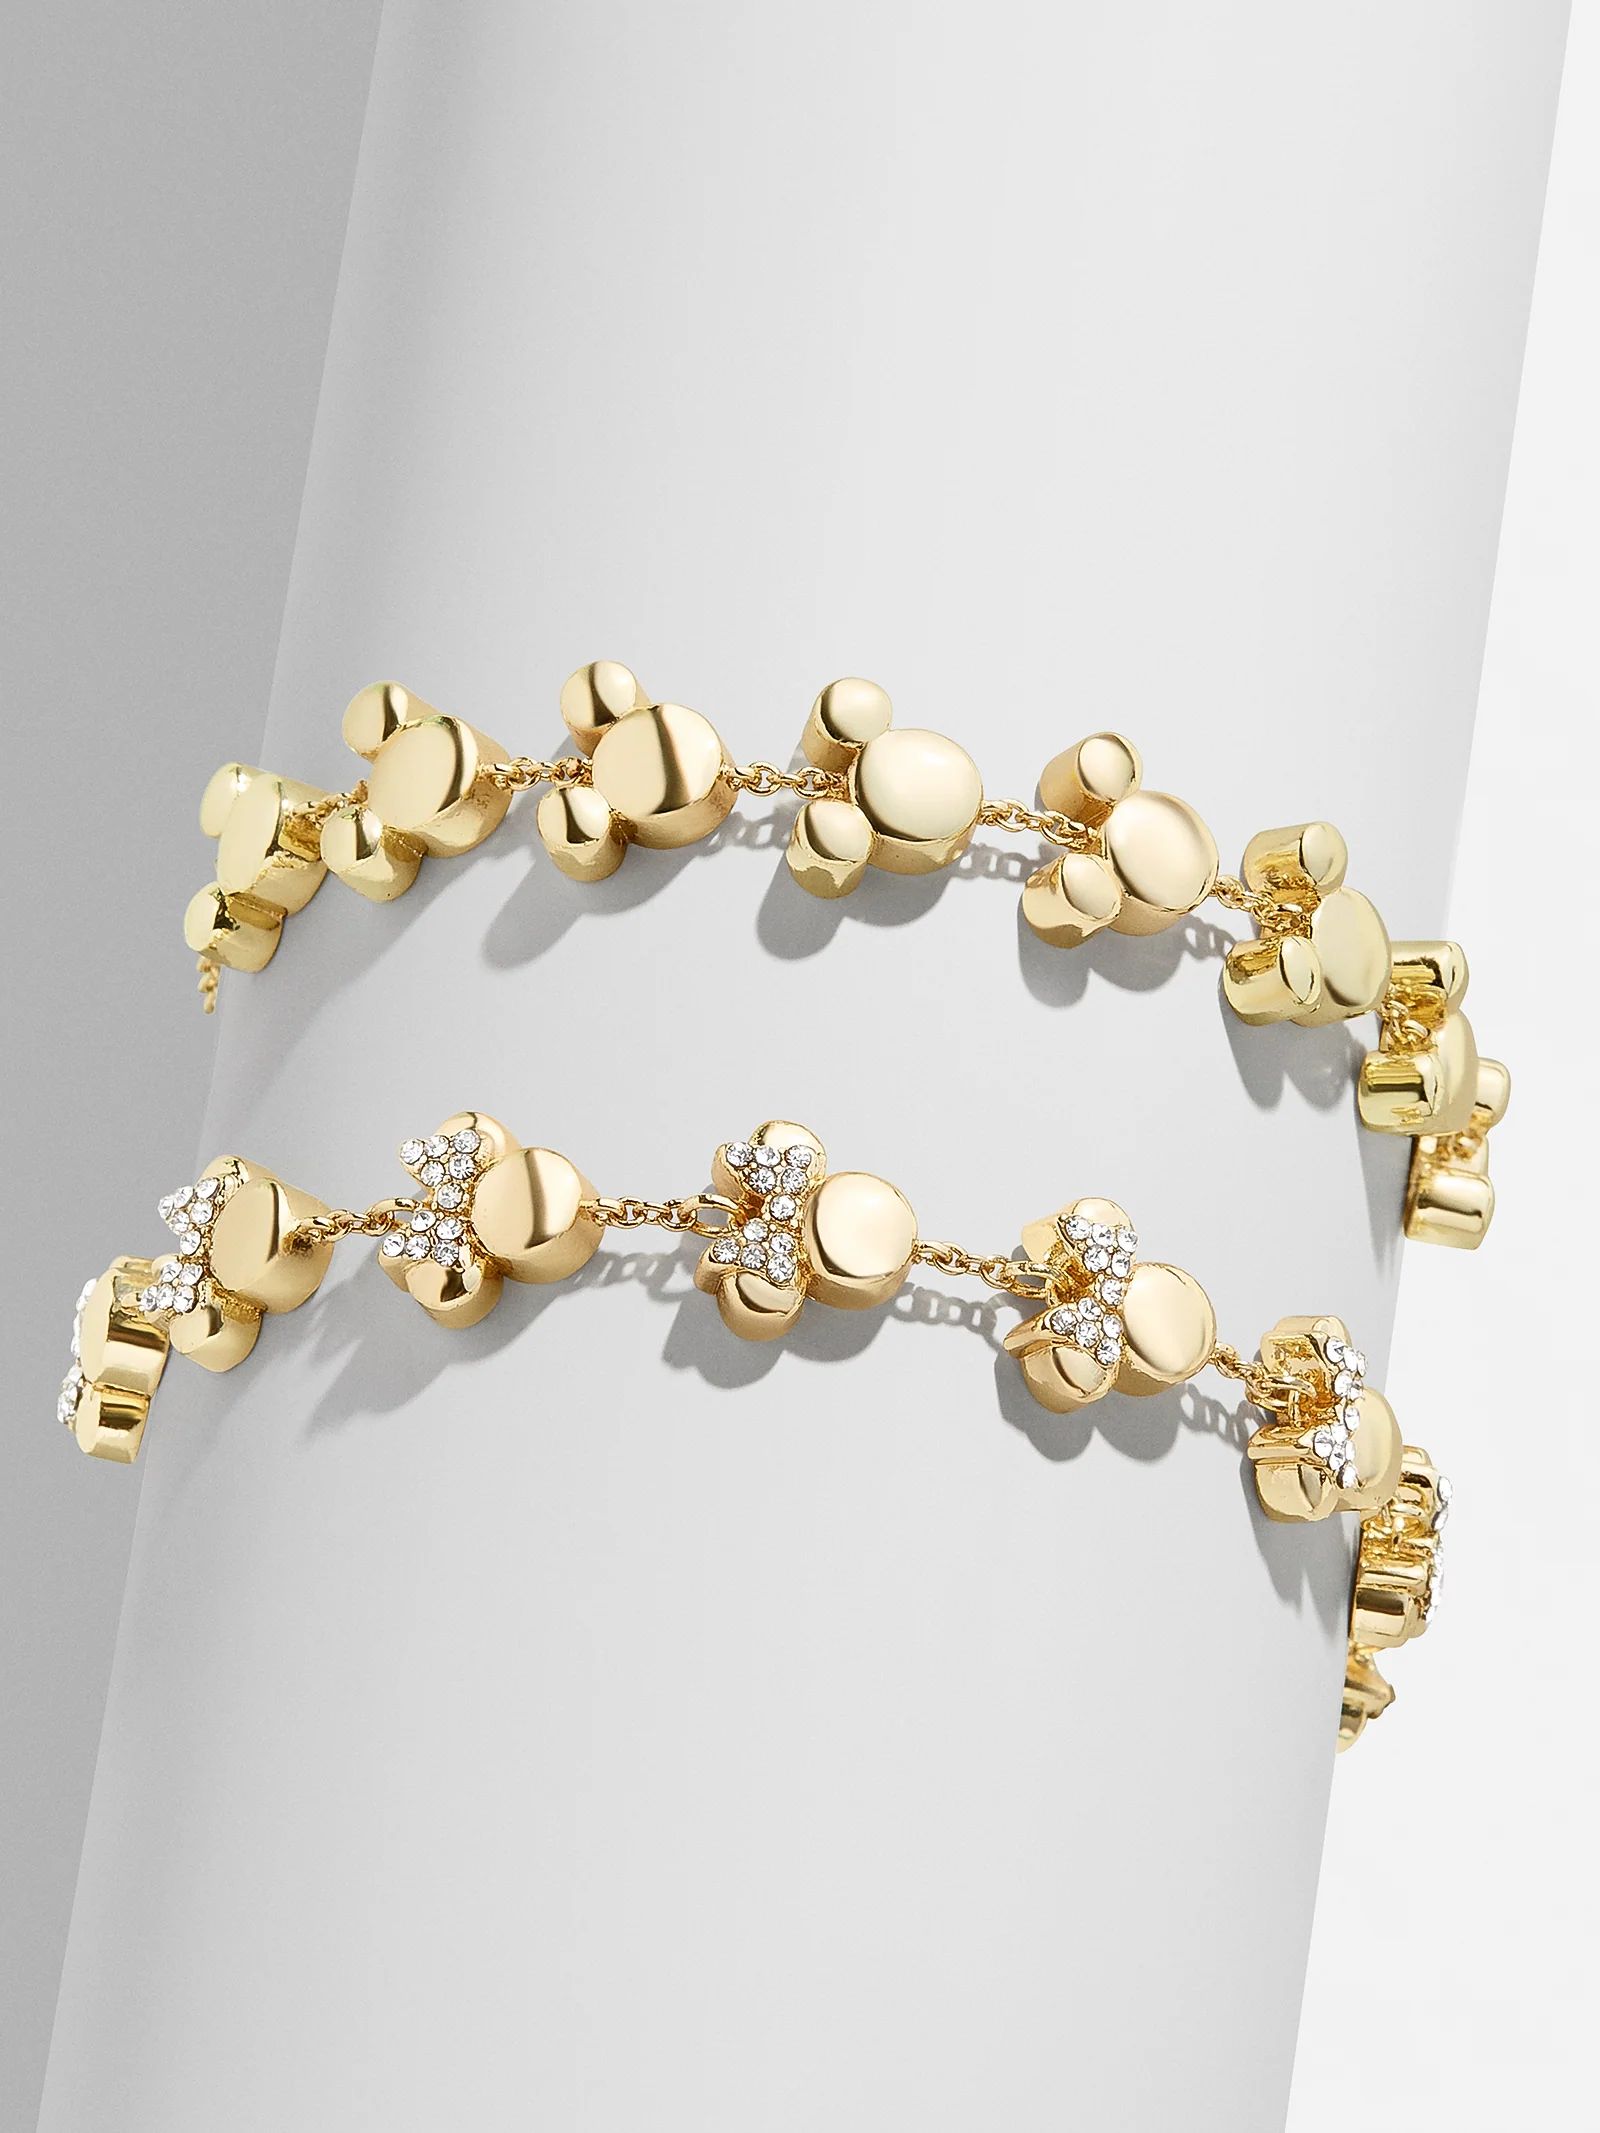 Disney Pull-Tie Bracelet - Gold | BaubleBar (US)